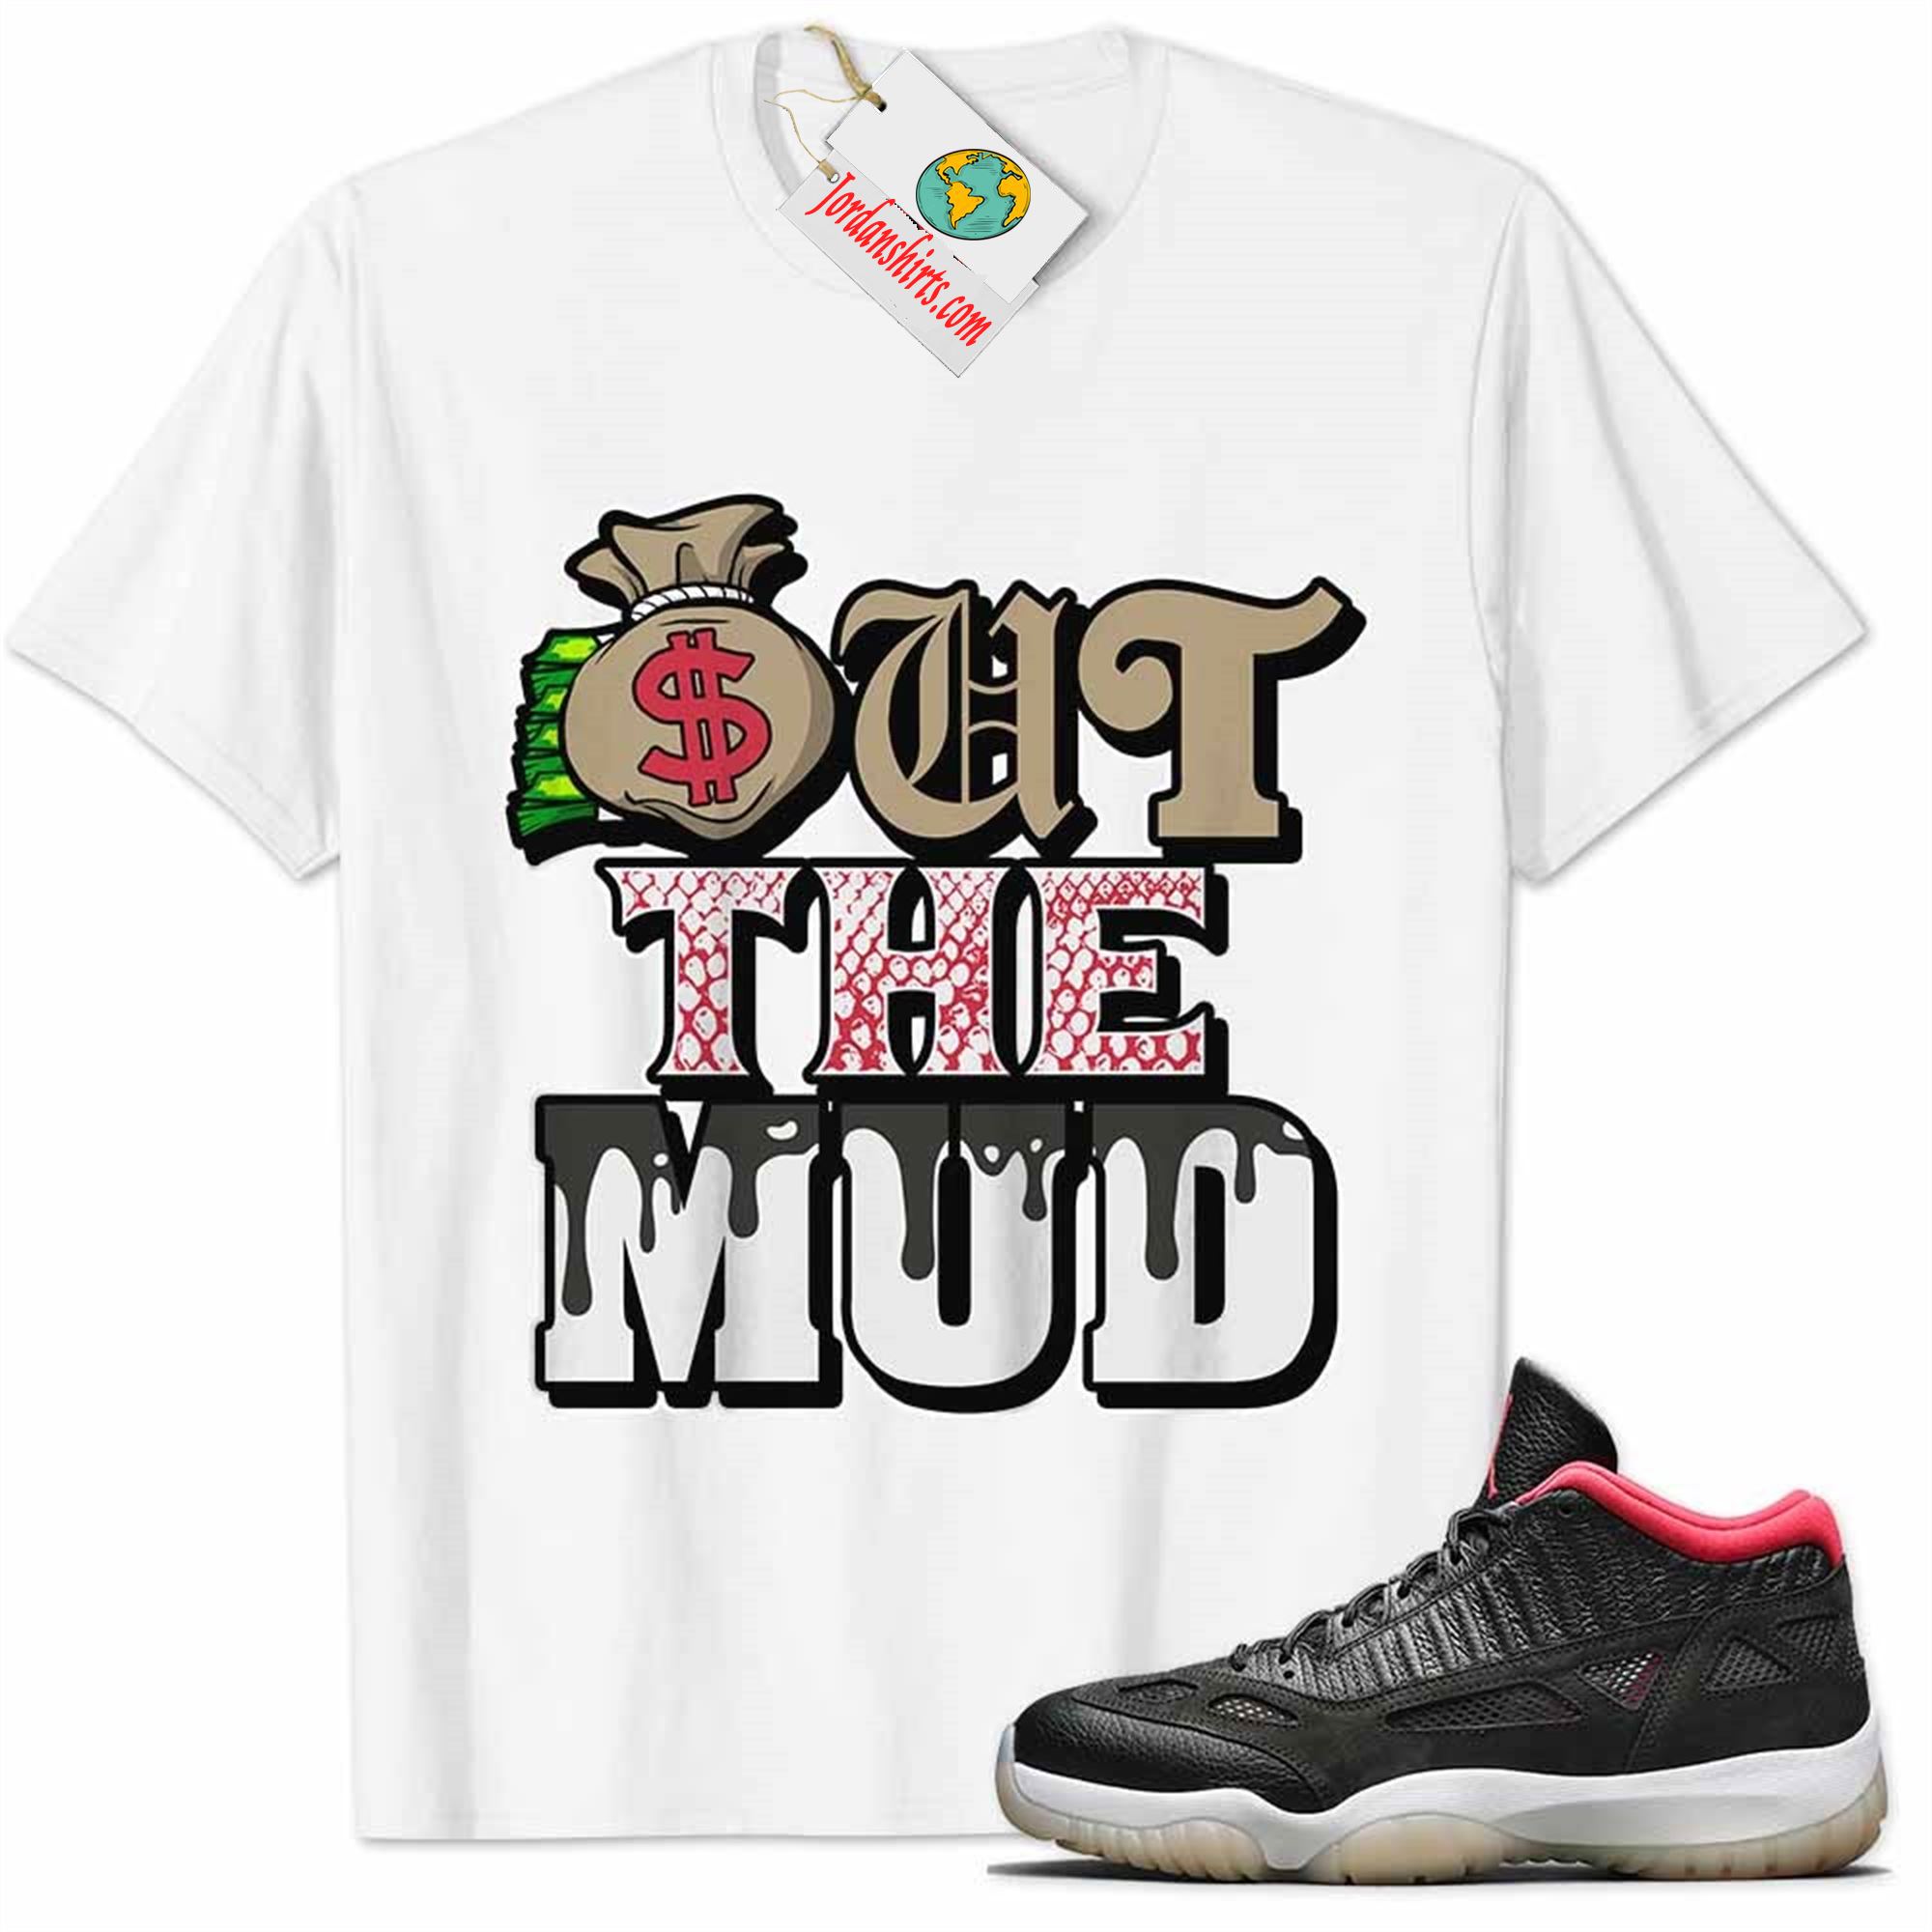 Jordan 11 Shirt, Jordan 11 Bred Shirt Out The Mud Money Bag White Plus Size Up To 5xl